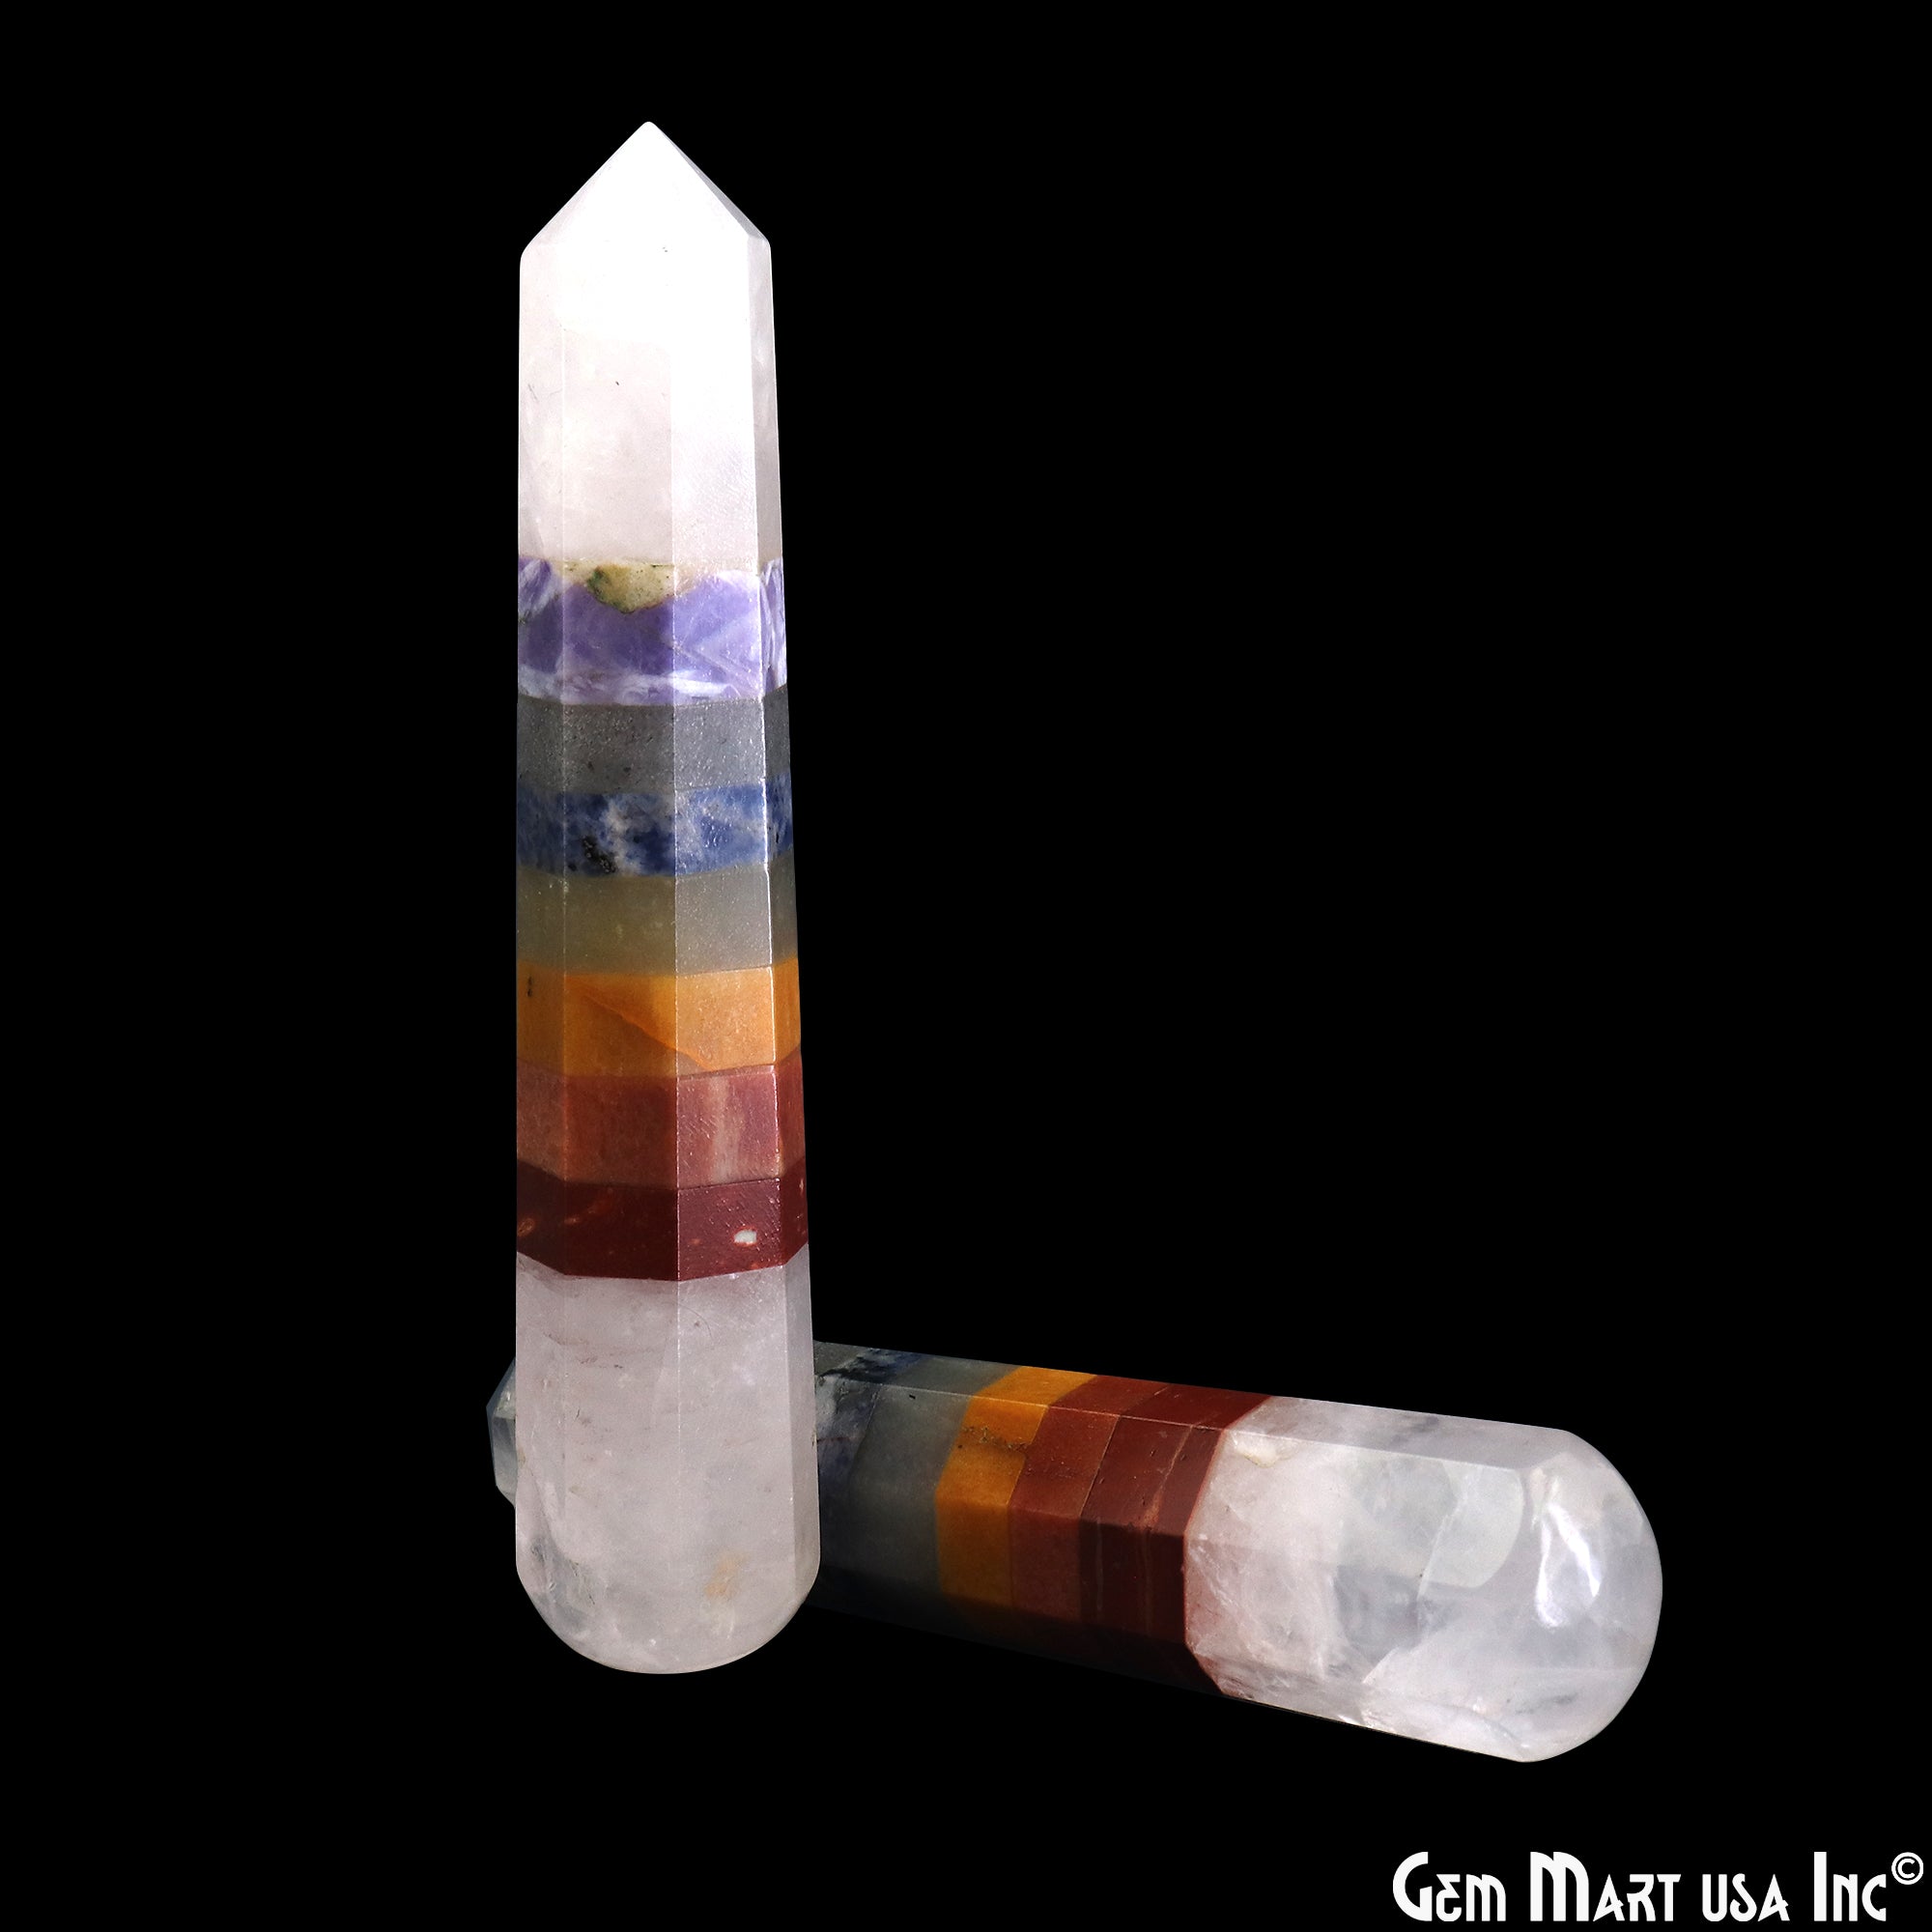 7 Chakra With Crystal Point Pencil Jumbo Tower Healing Meditation Gemstones 5 Inch